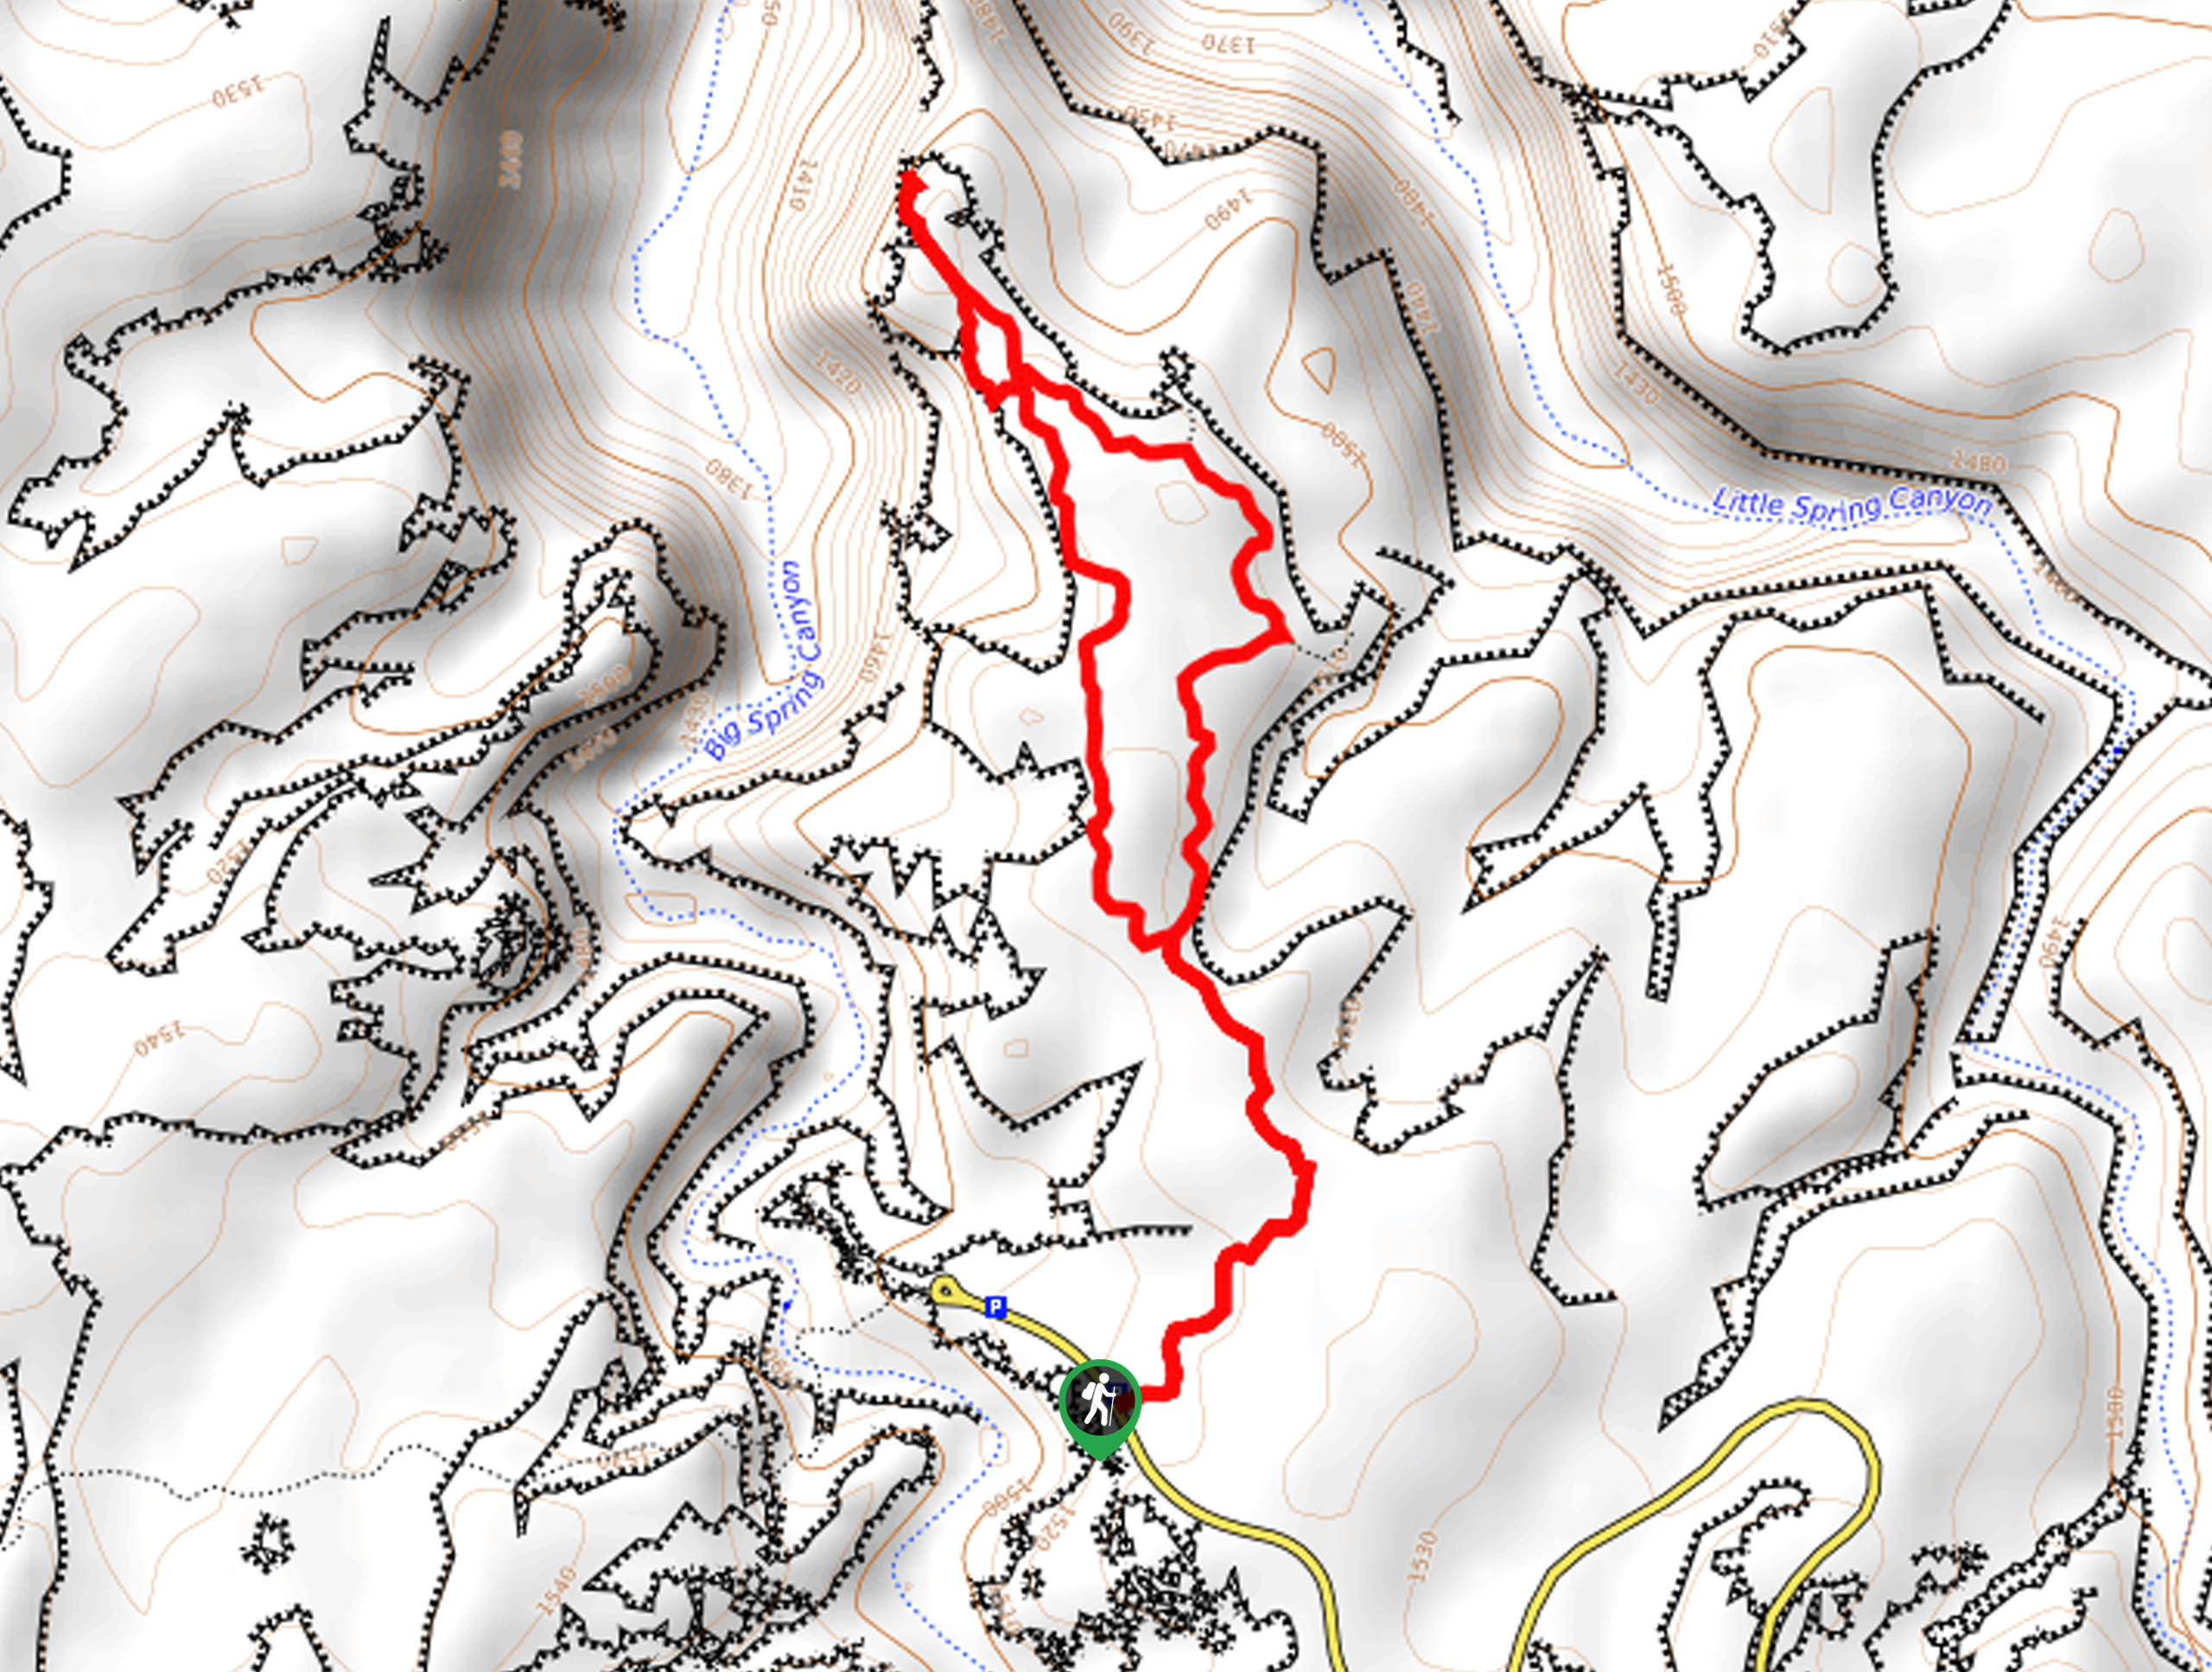 The Slickrock Hiking Trail Map